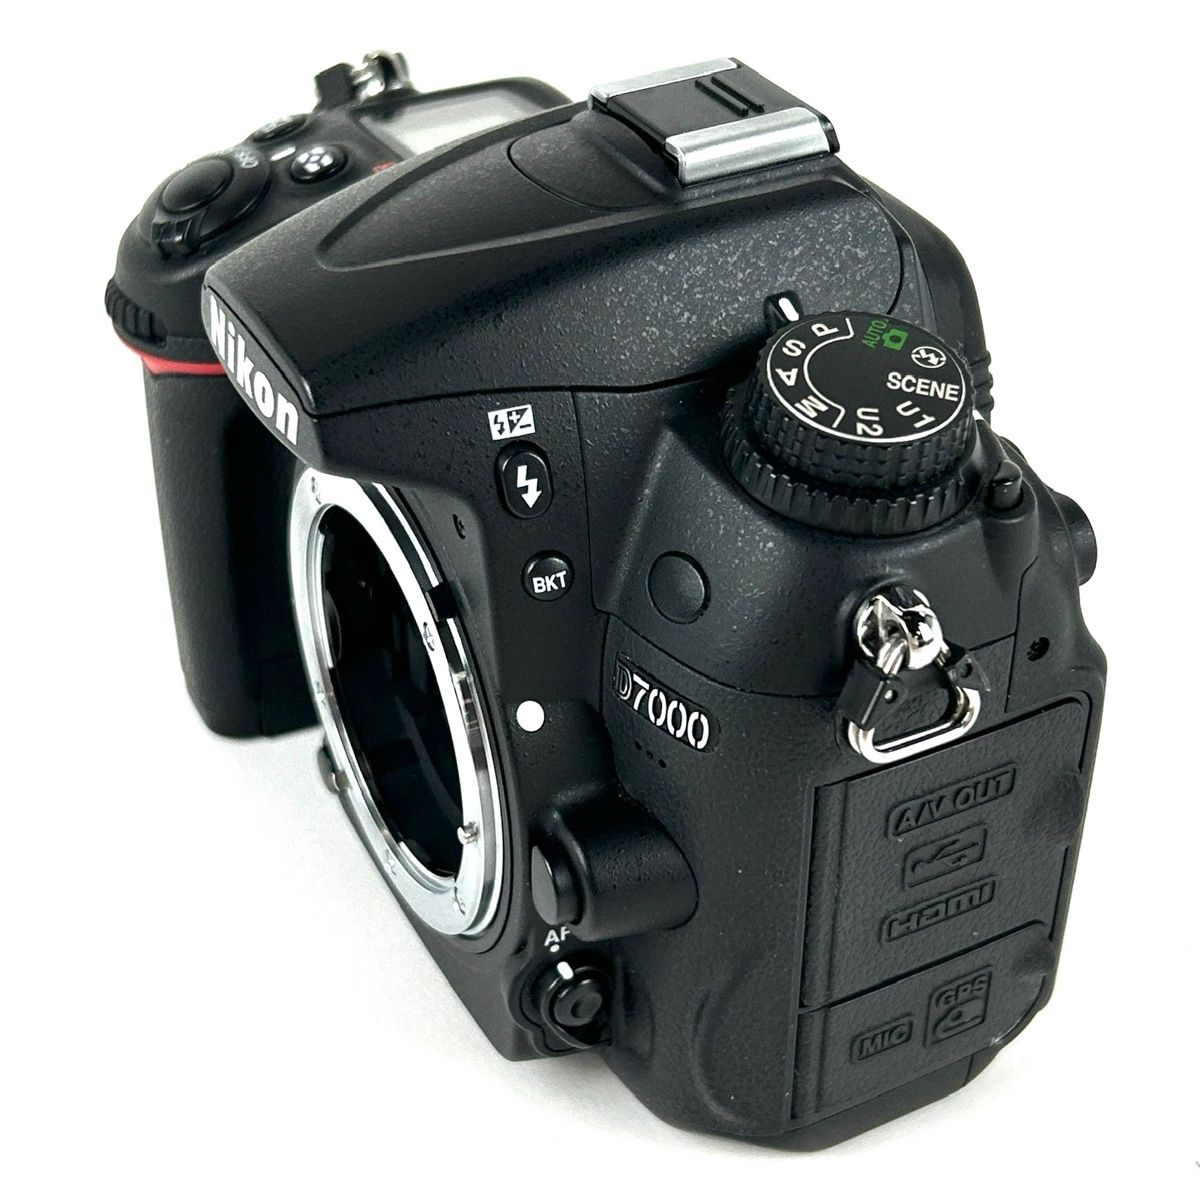 Nikon デジタル一眼レフカメラ D7000 スーパーズームキット AF-S DX NIKKOR 18-300mm f/3.5-5.6G ED VR付属 D7000 LK18-300